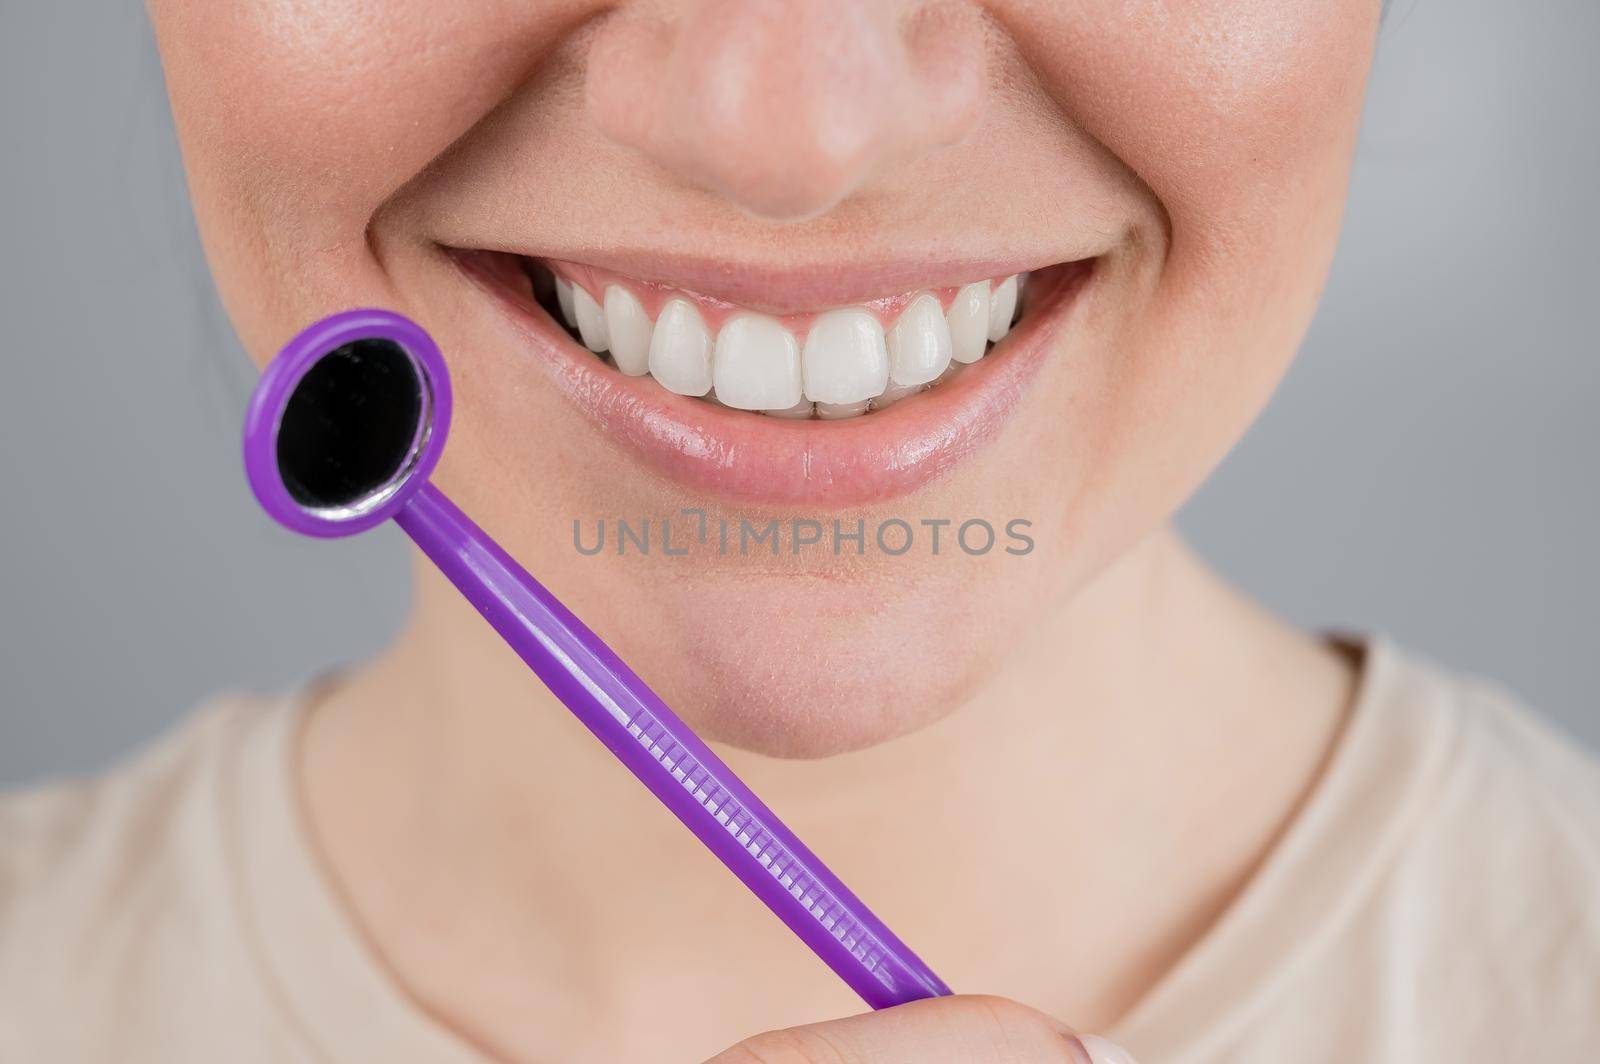 Caucasian woman with snow white smile holding dentist mirror